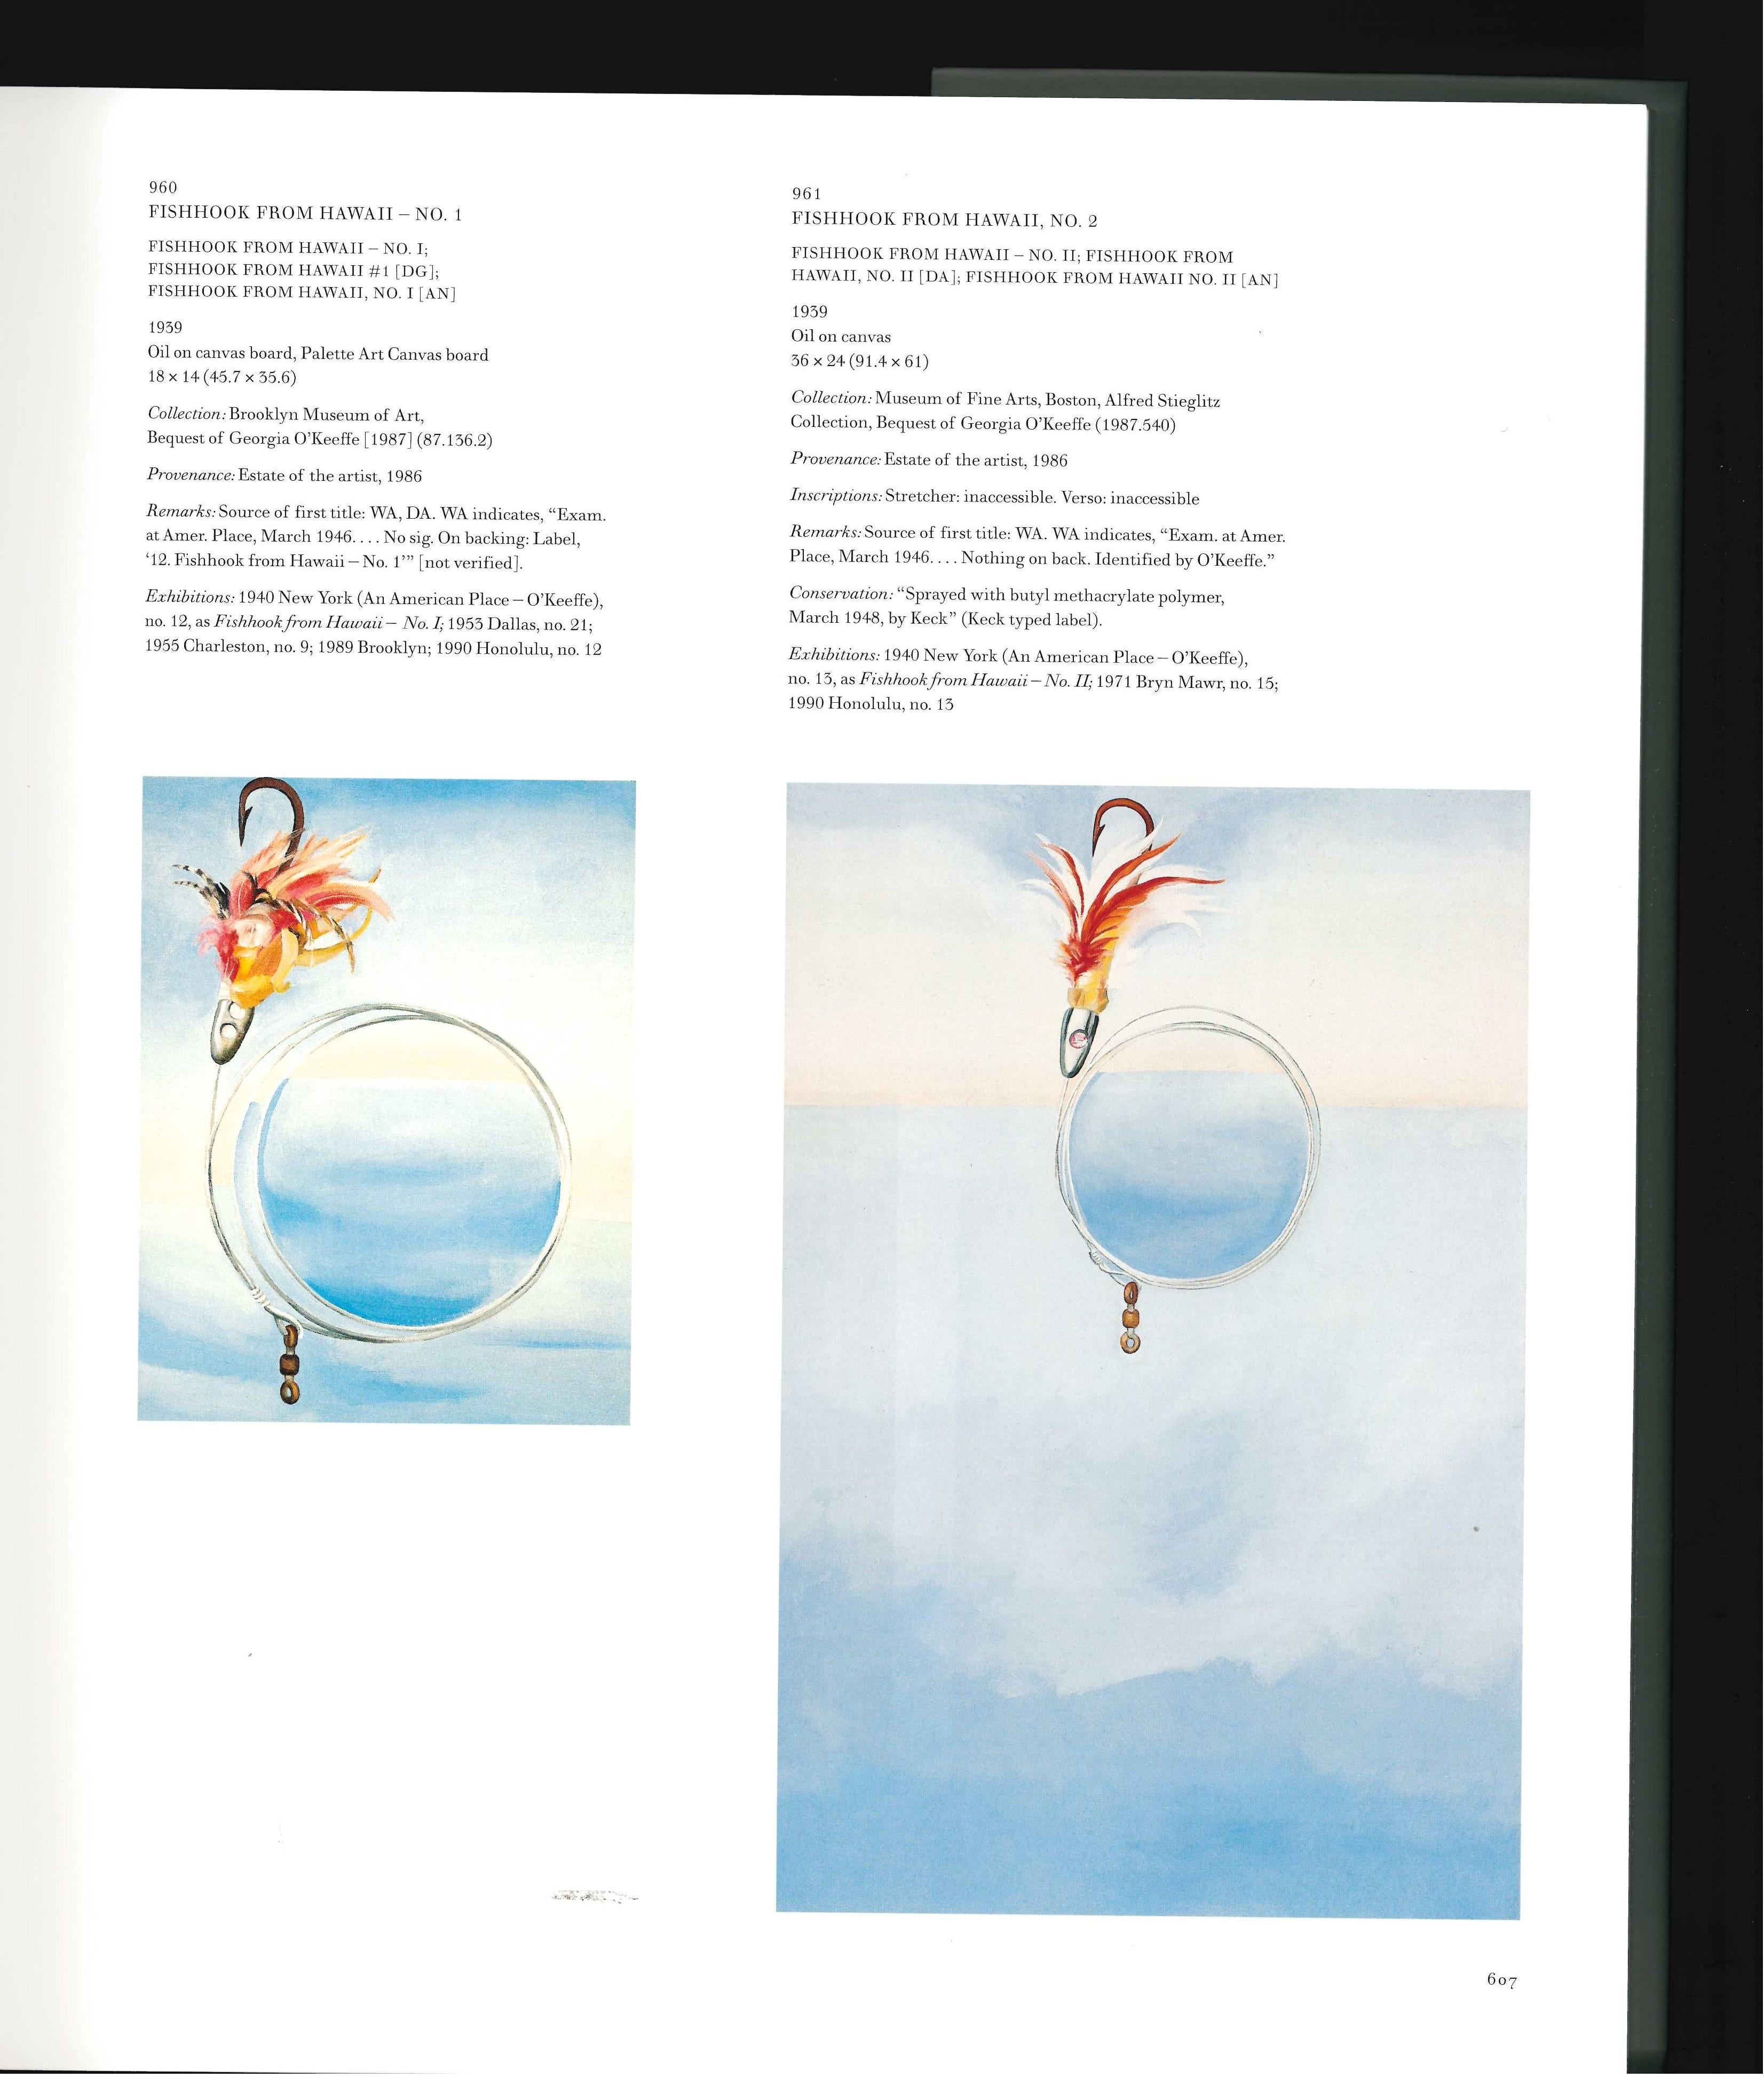 20th Century Georgia O'Keeffe: Catalogue Raisonne by Barbara Buhler Lynes (Books) For Sale